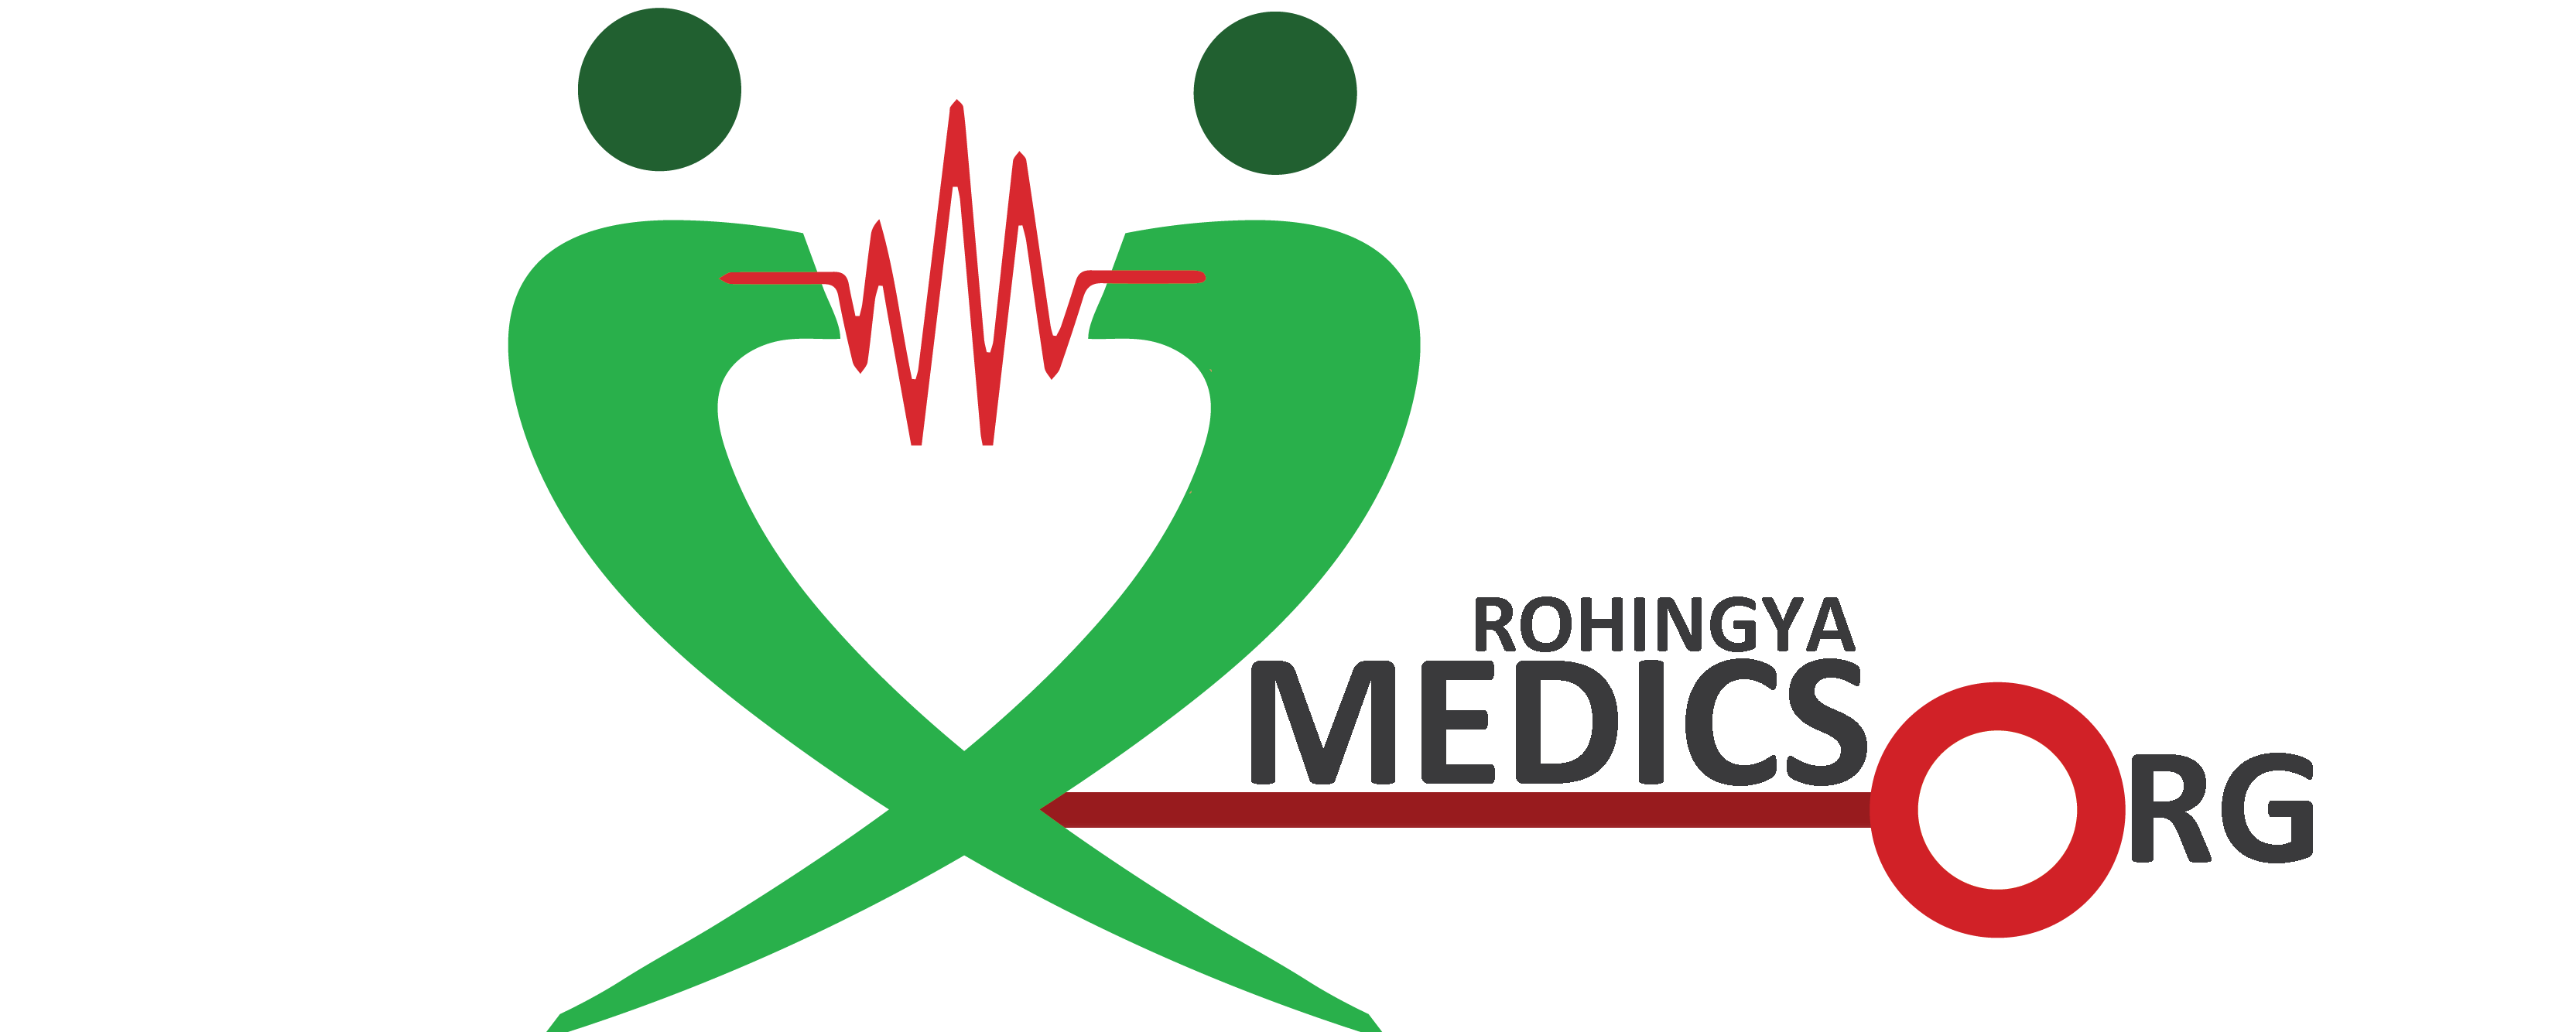 Rohingya Medics Organisation